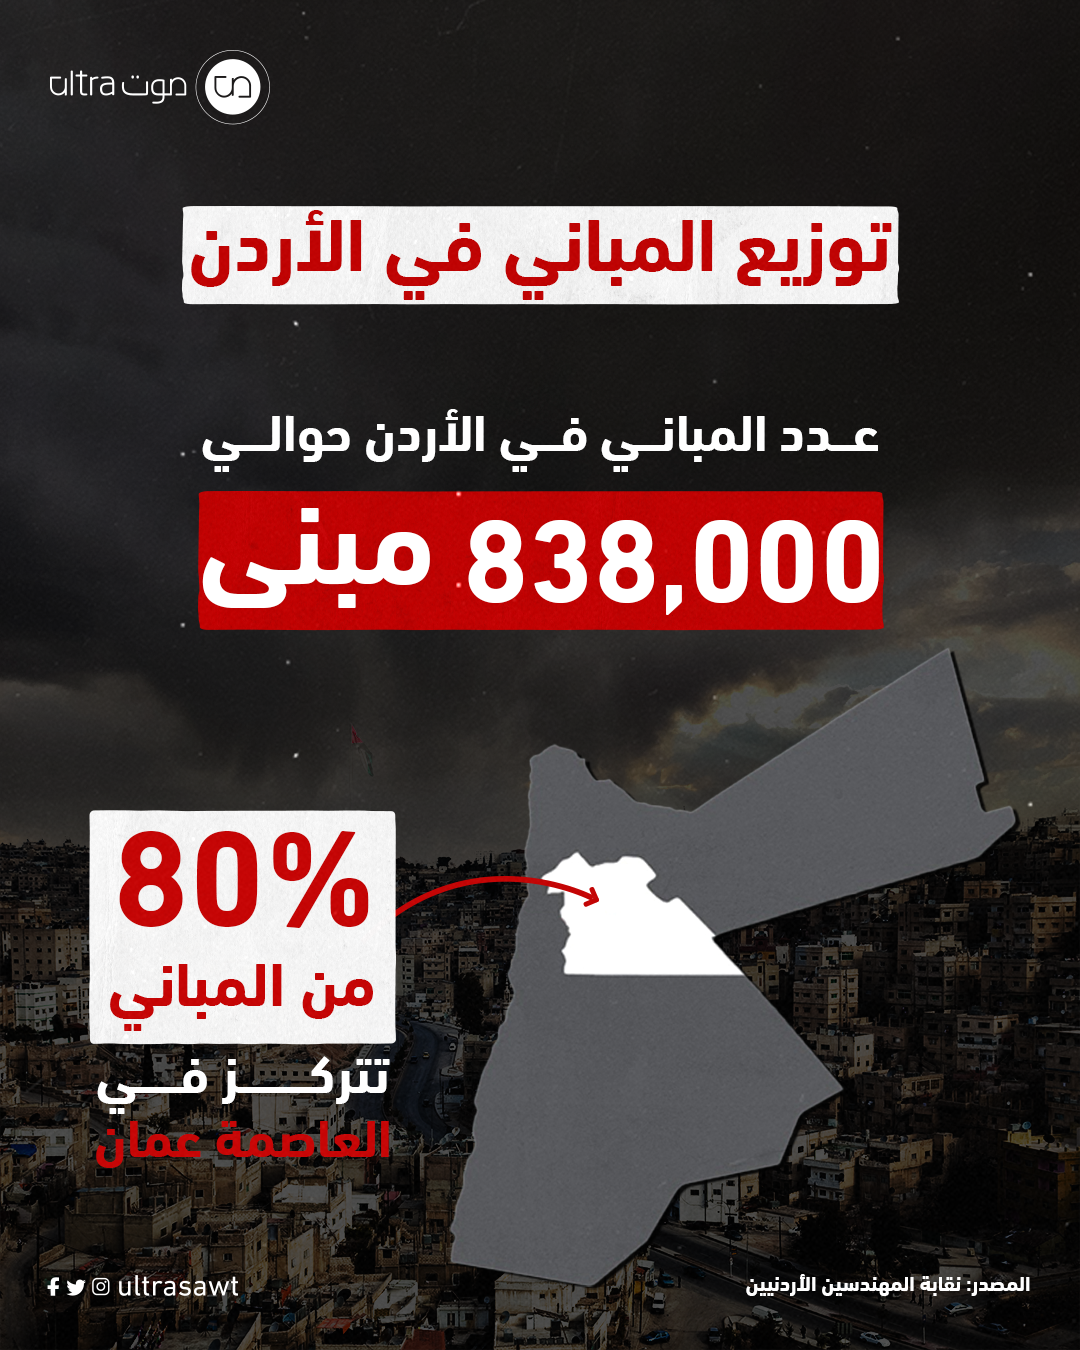 80% of buildings in Amman